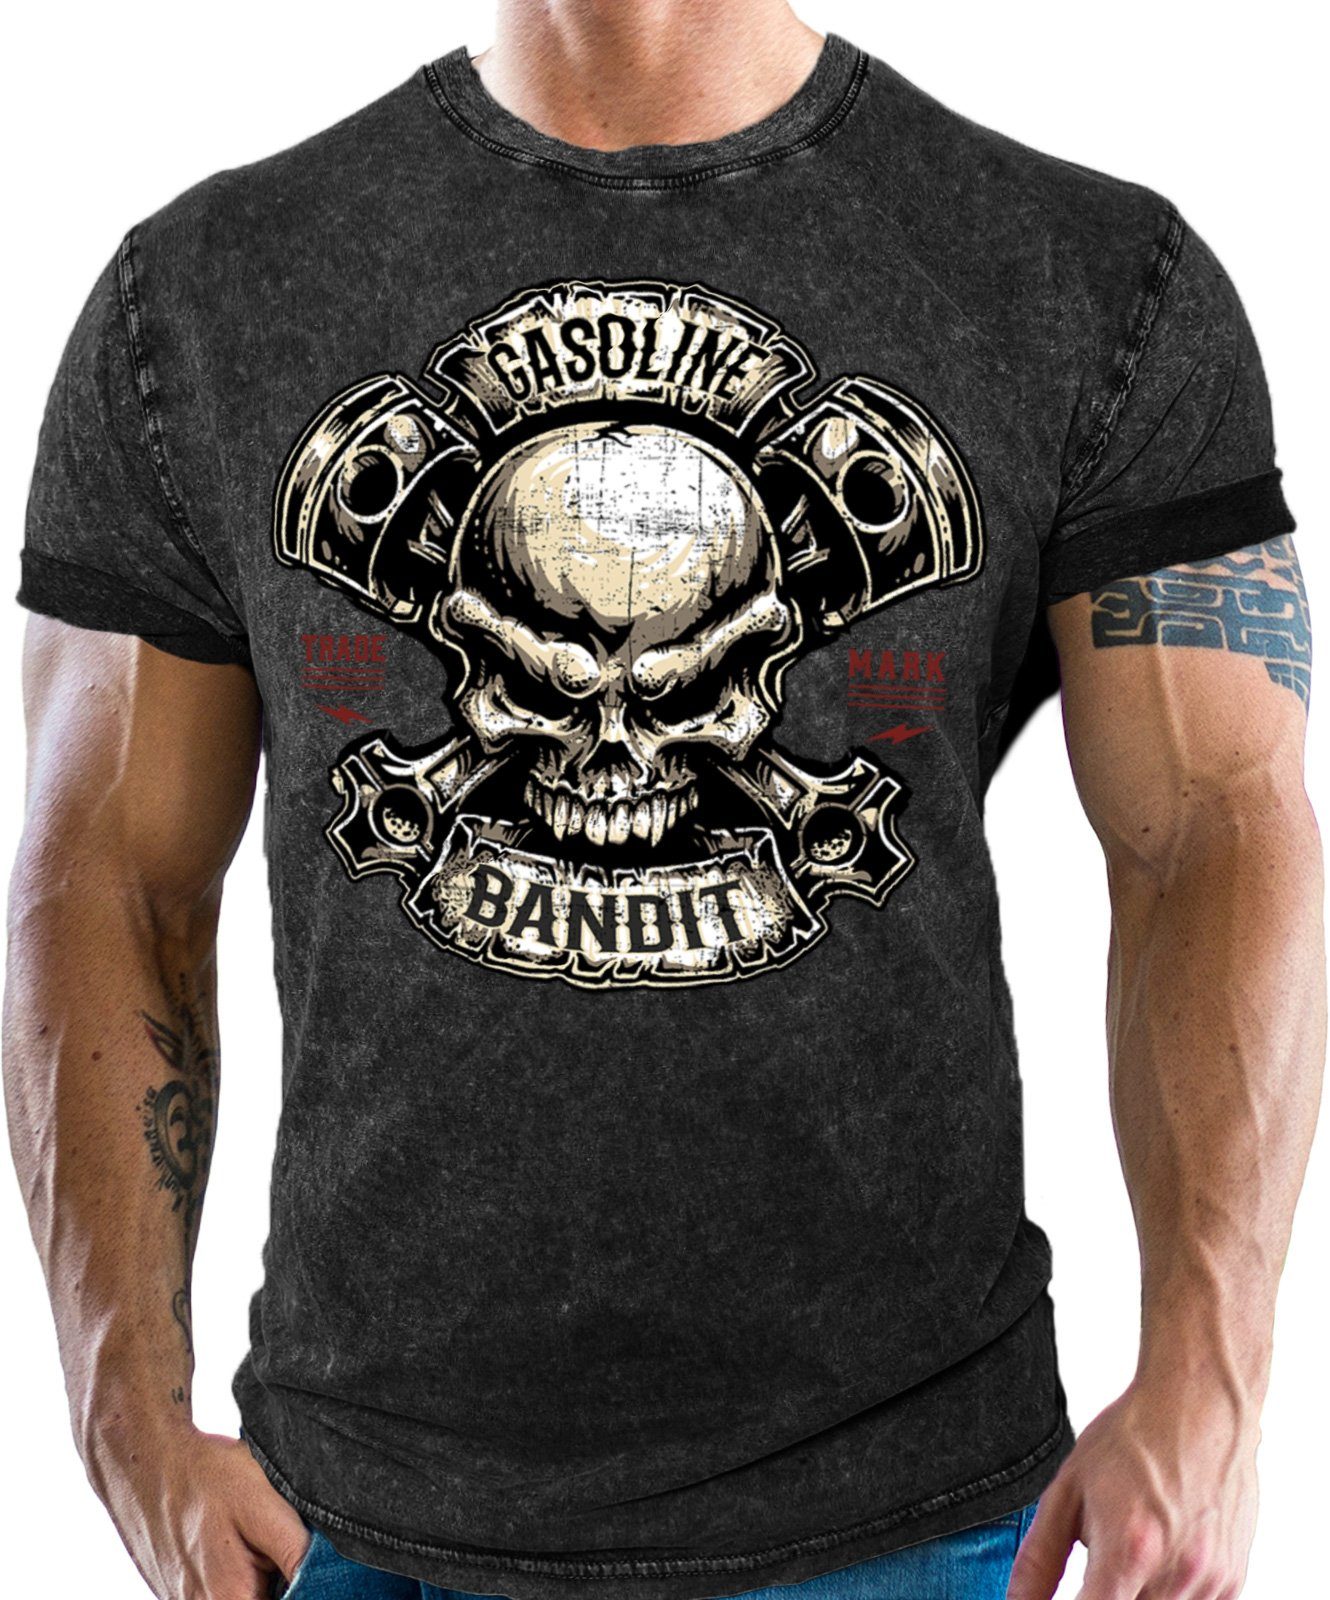 GASOLINE BANDIT® T-Shirt in washed black look für Biker Racer Fans: Piston Skull | T-Shirts